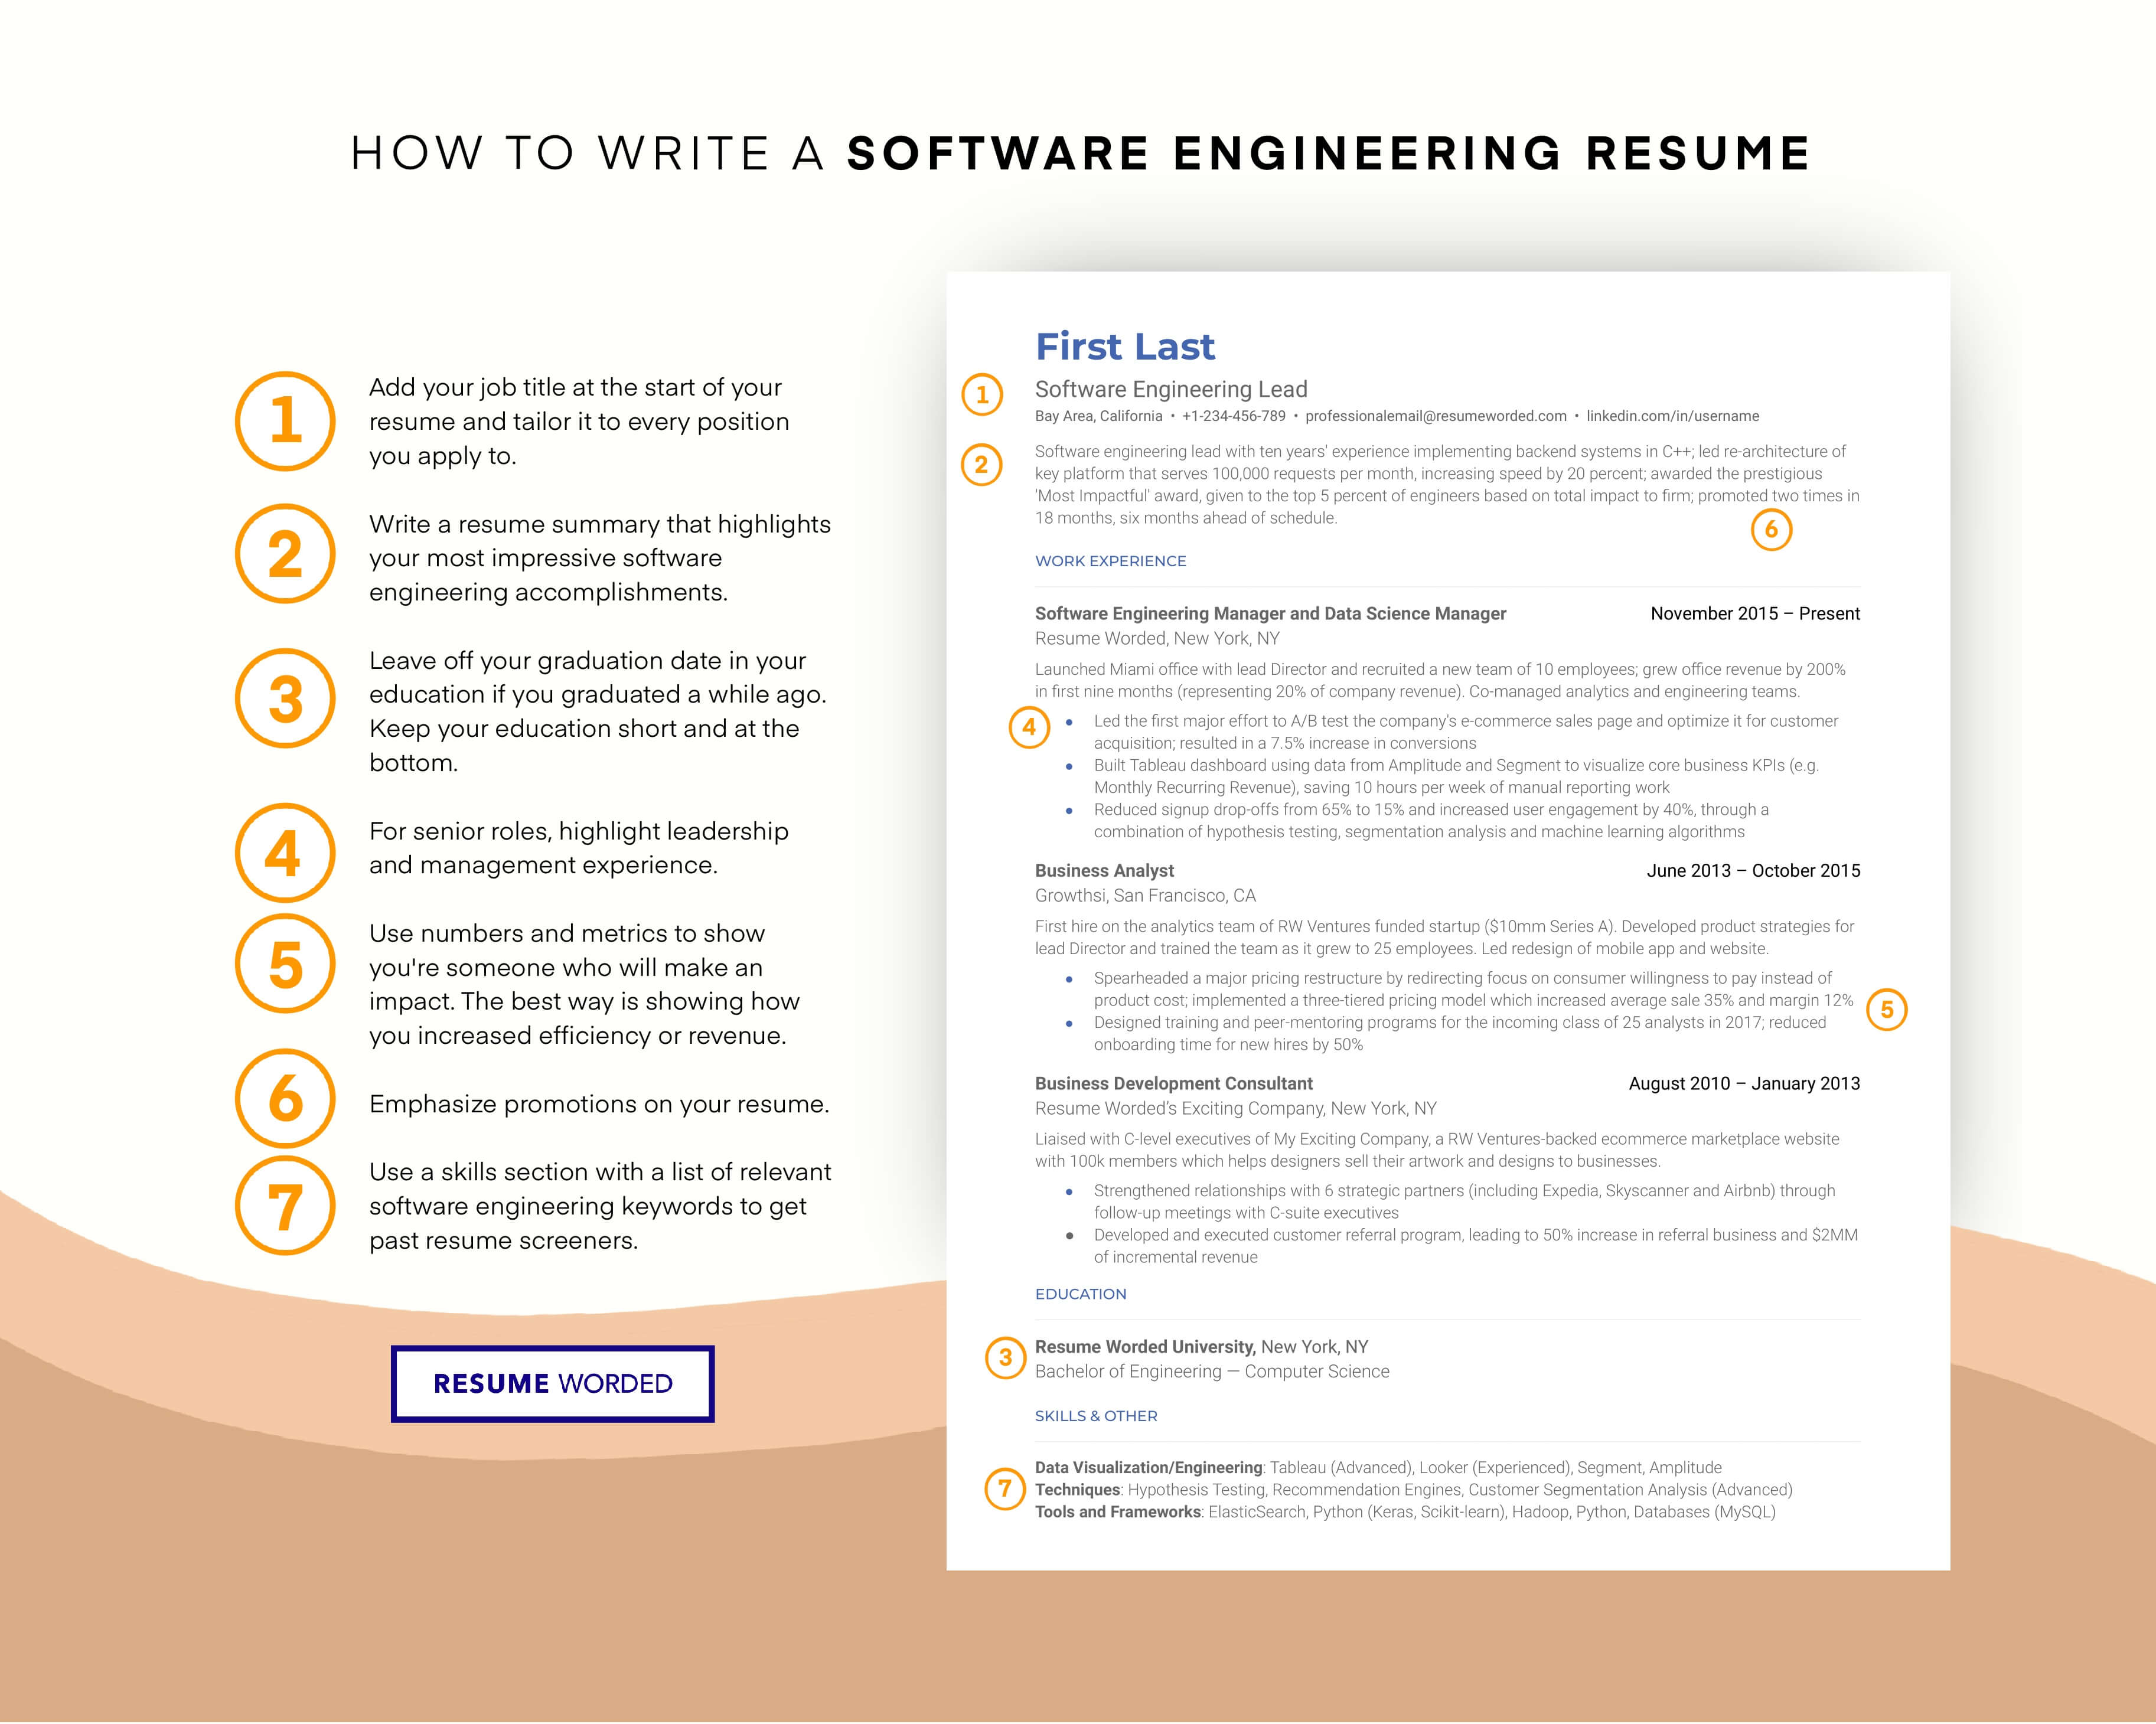 Gain internship experience in coding or programming - Junior SQL Developer Resume